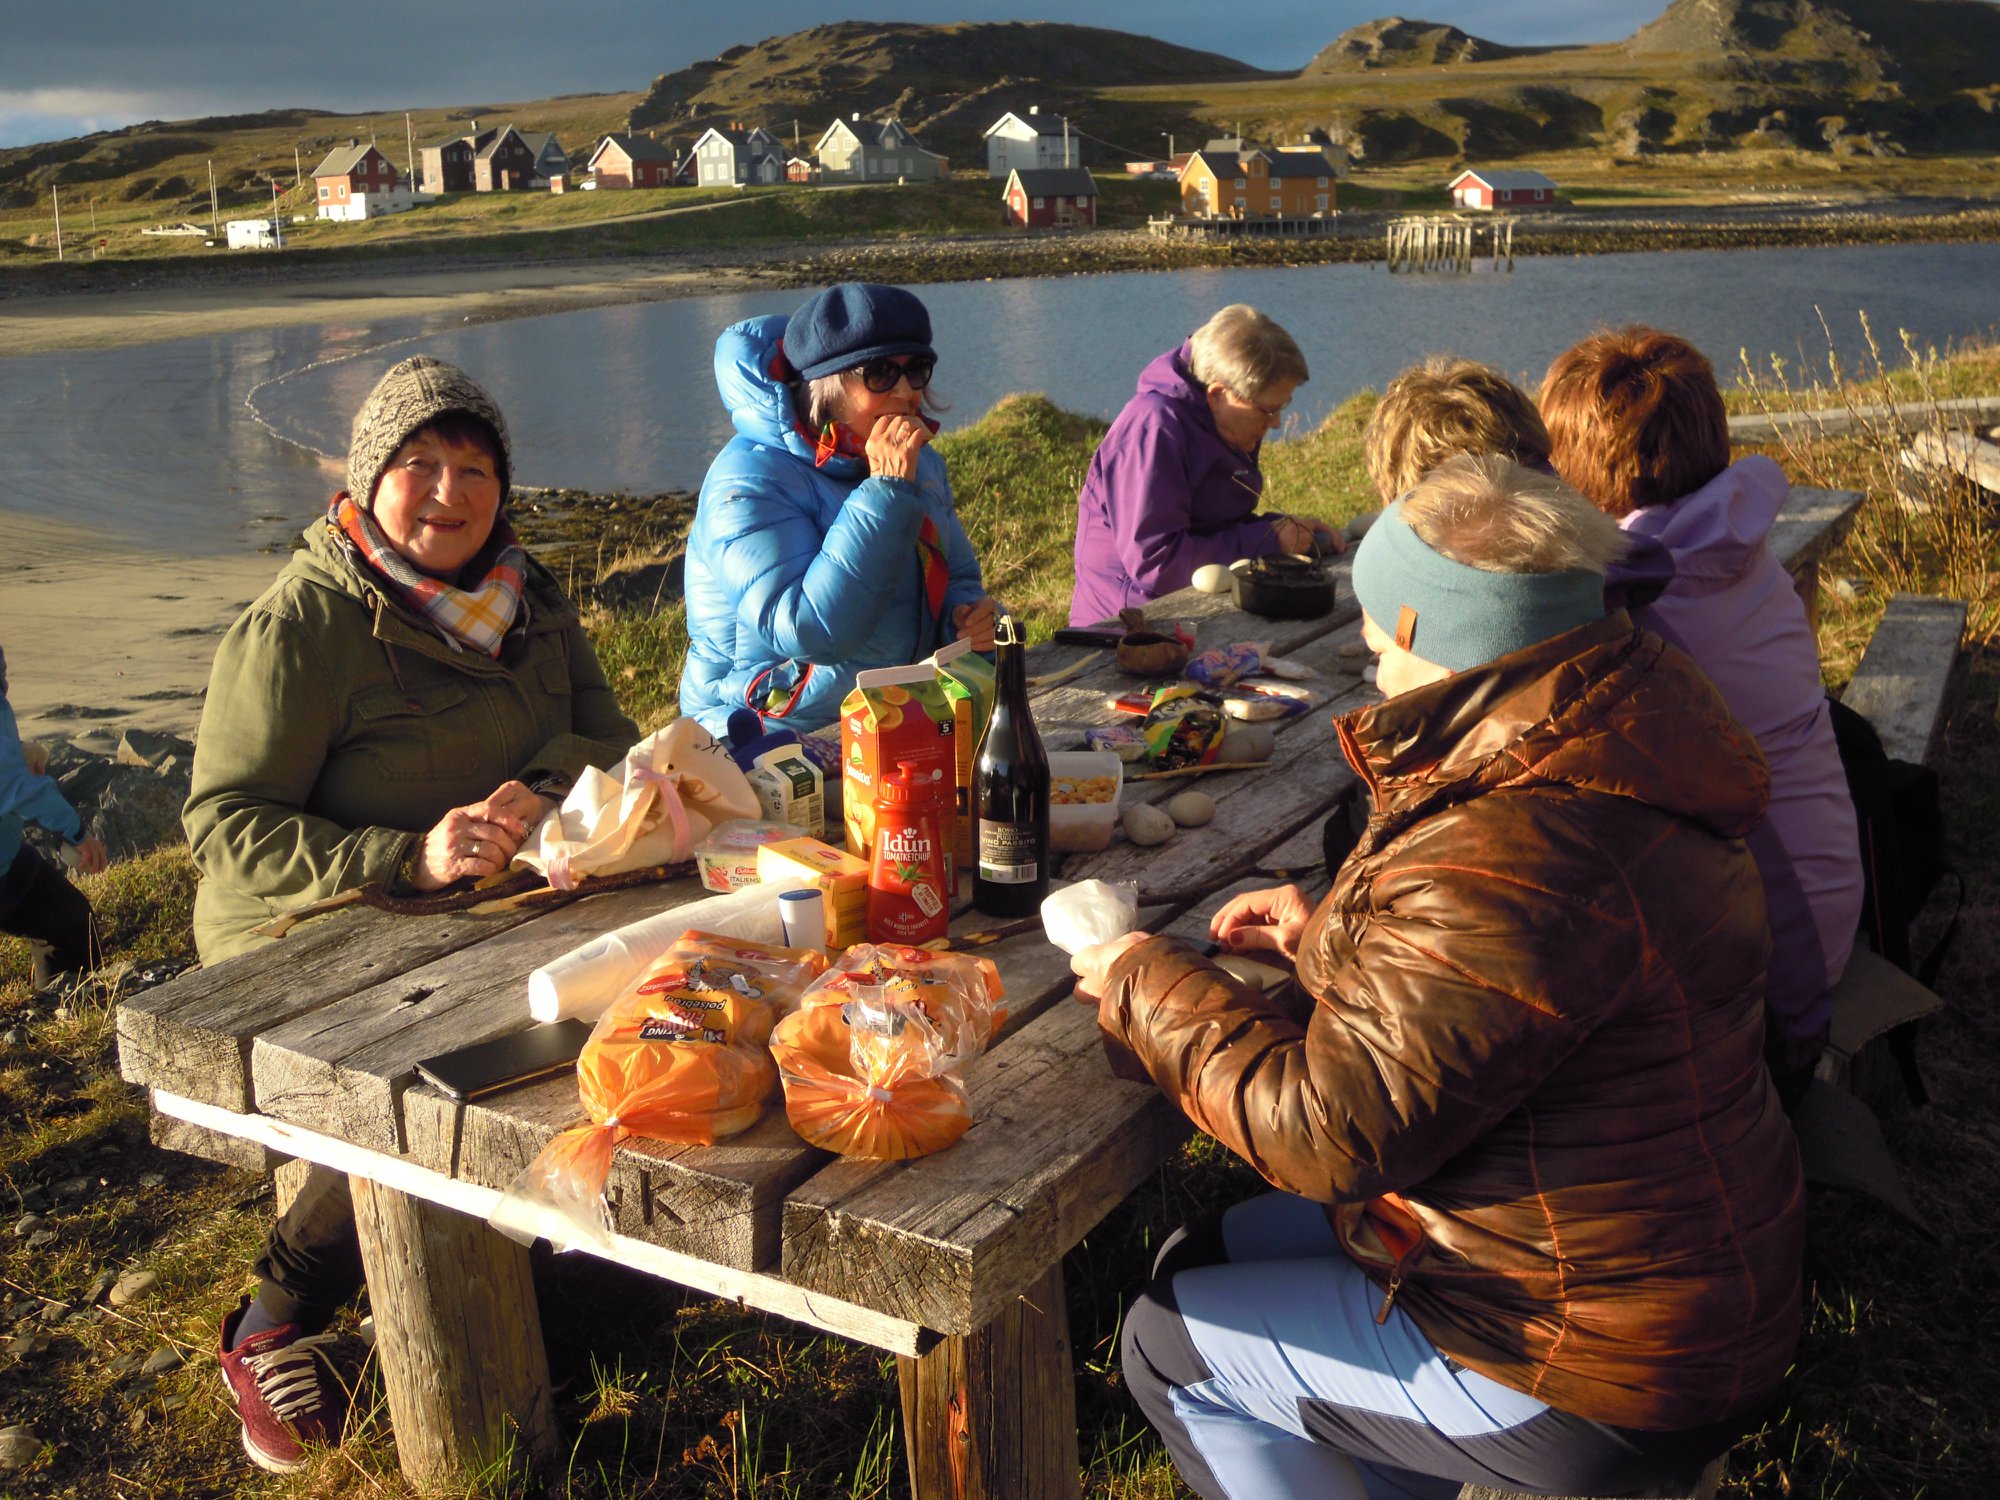 En gruppe mennesker sitter sammen på en benkl og spiser på tur ved vannet.